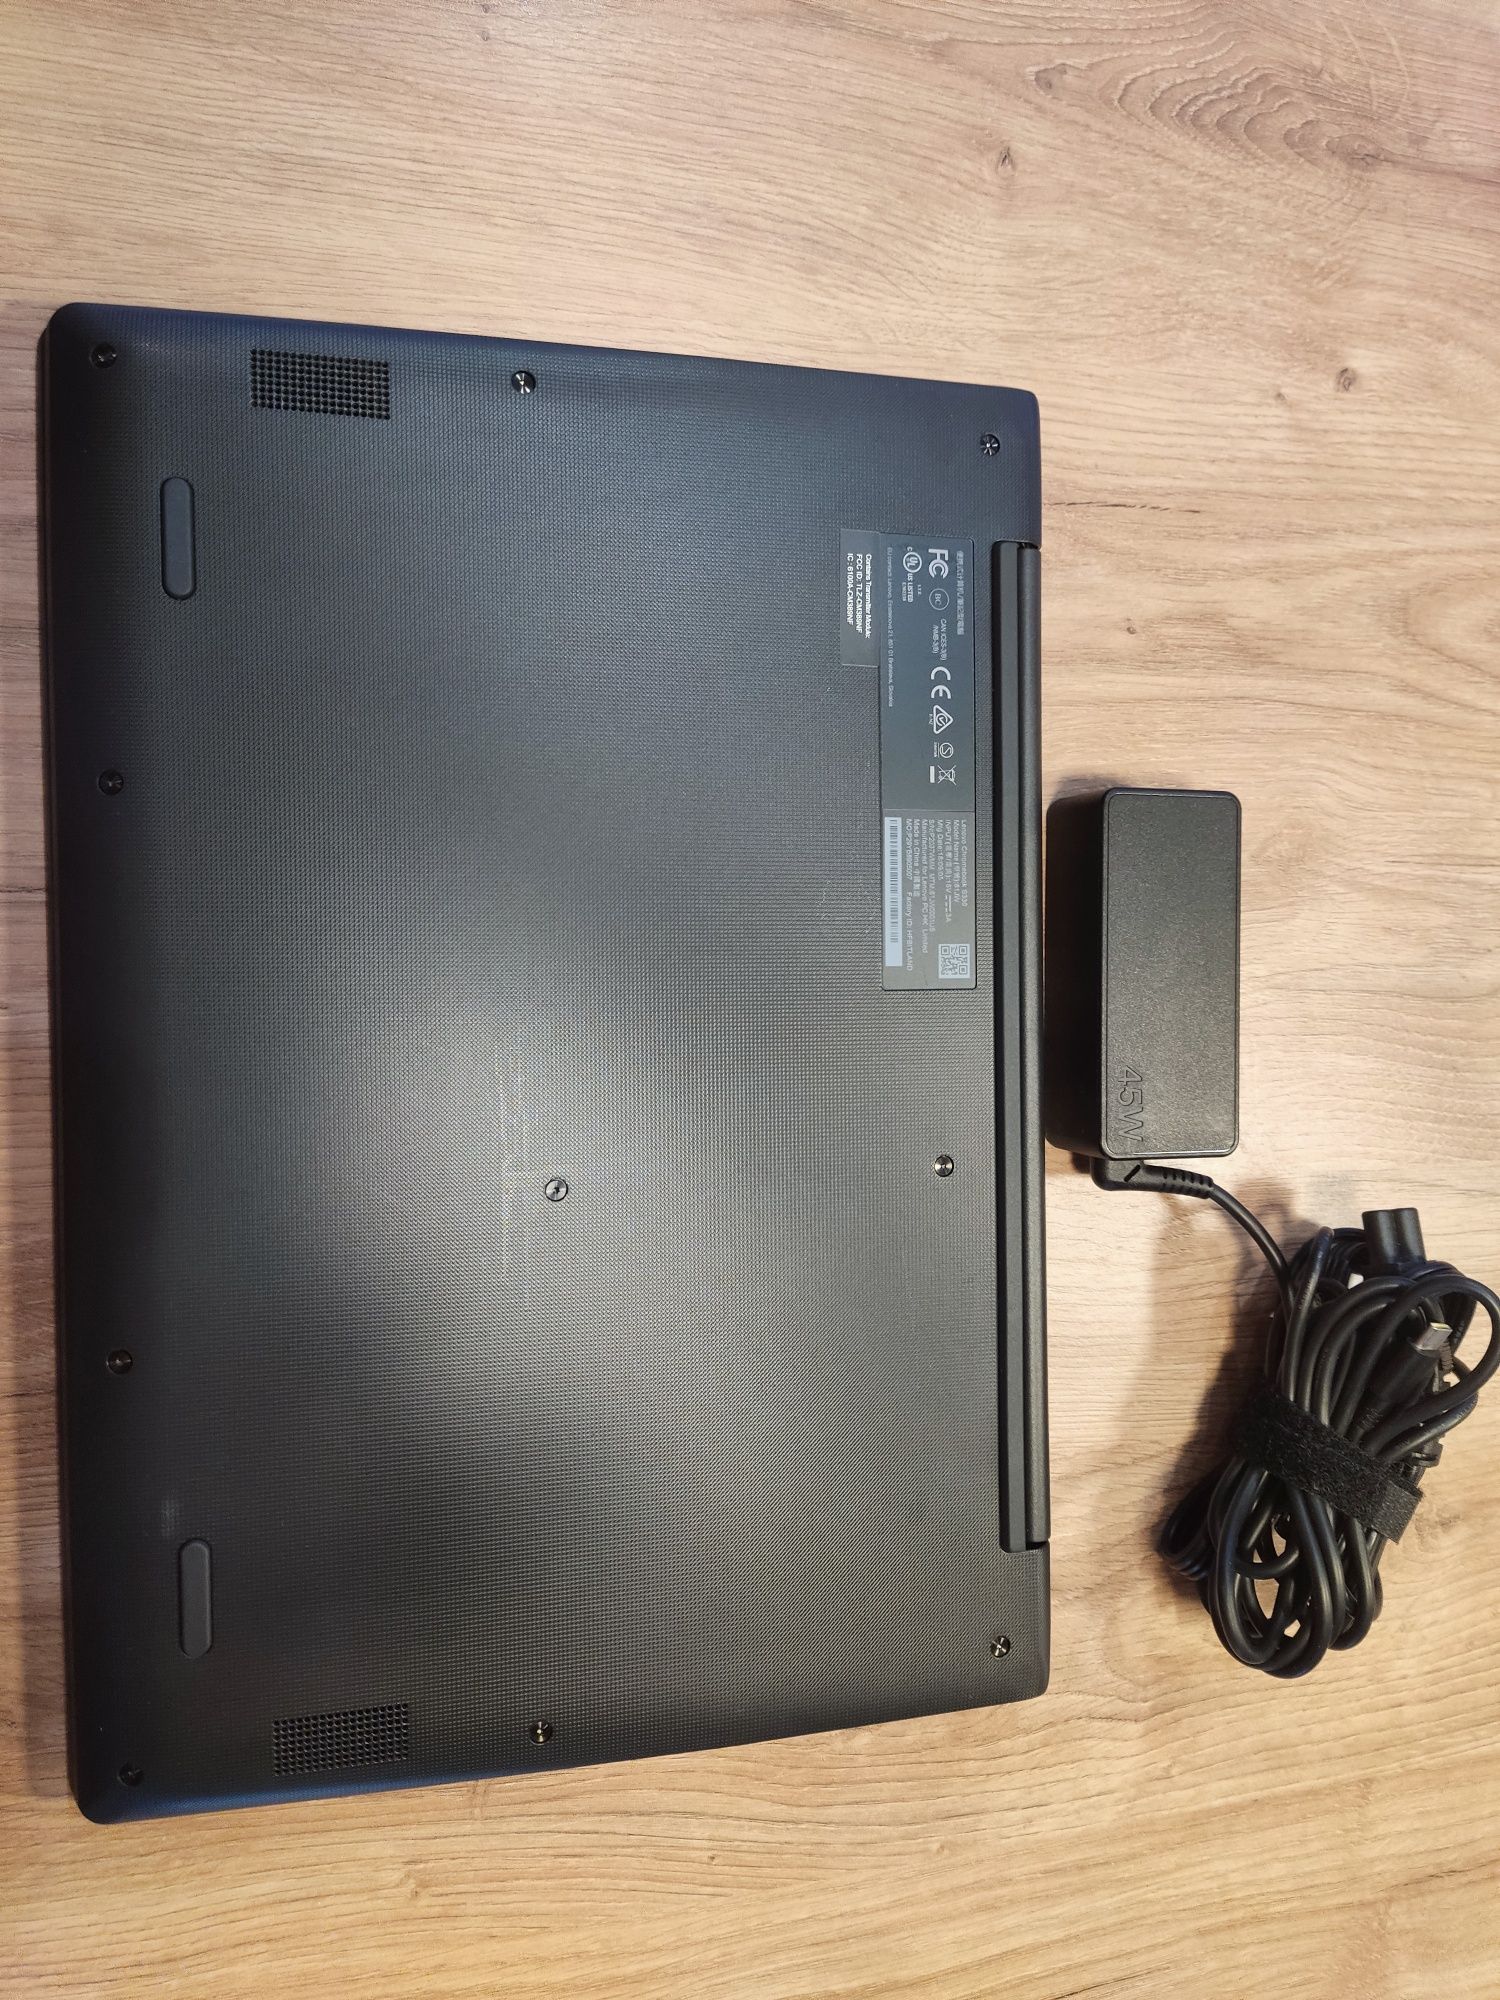 Lenovo Chromebook s330 ноутбук ультрабук нетбук